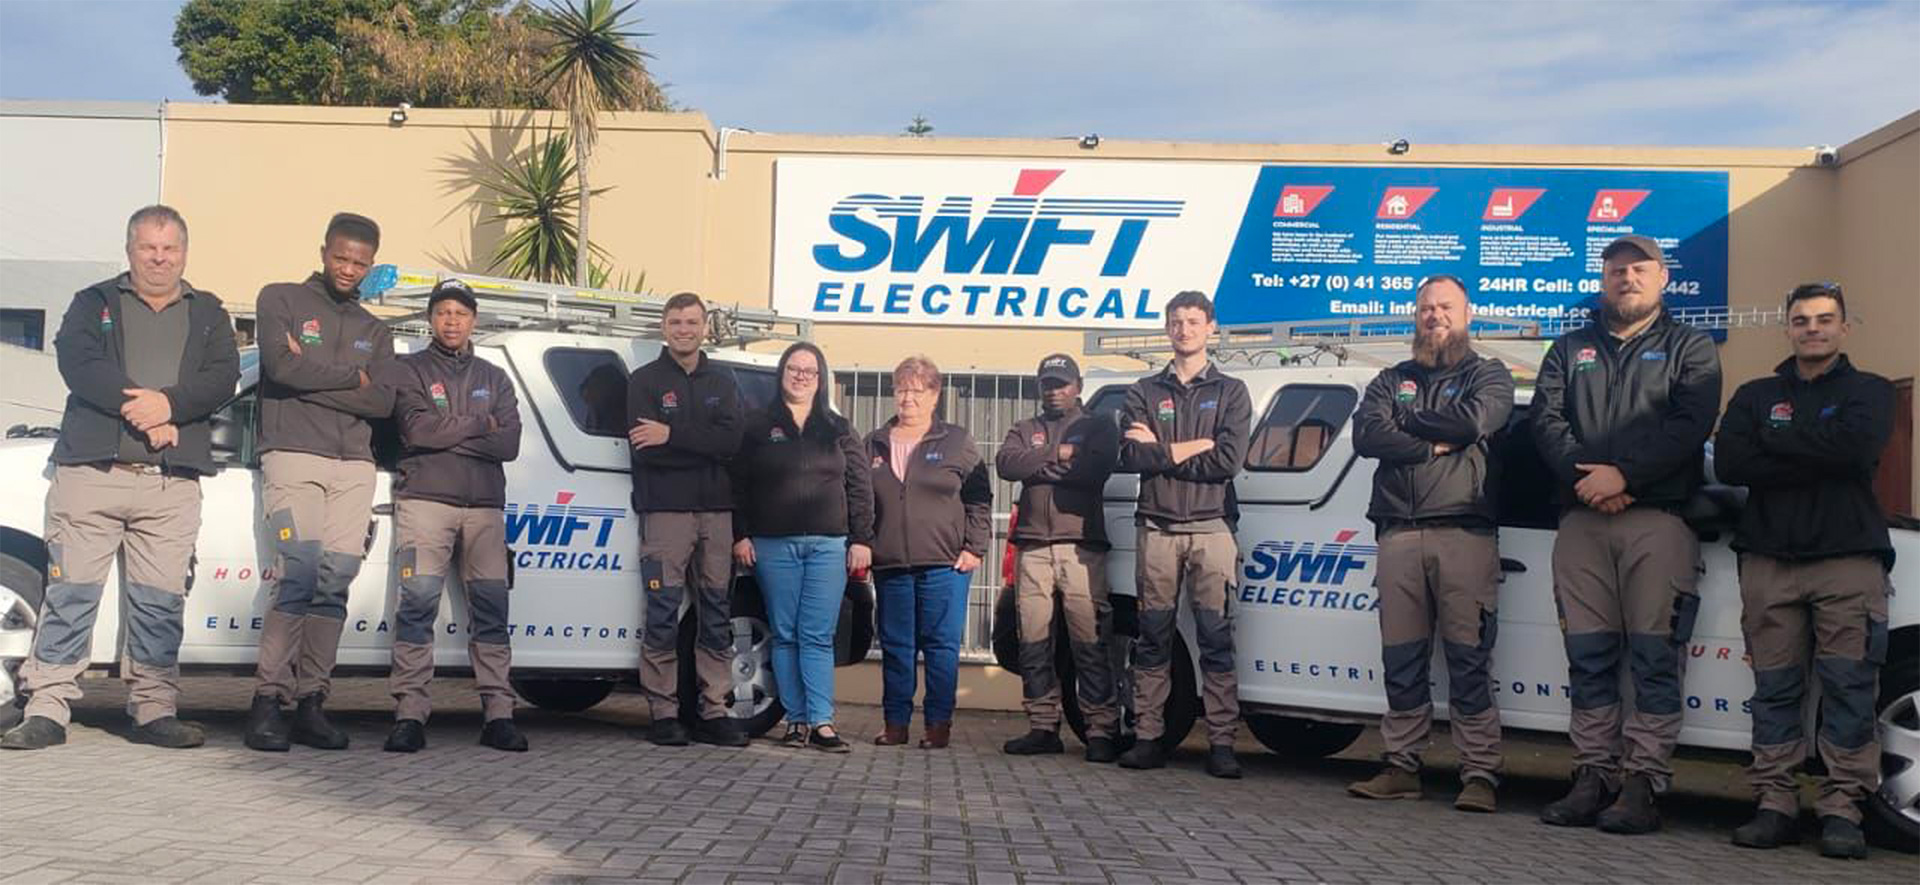 Swift Electrical team